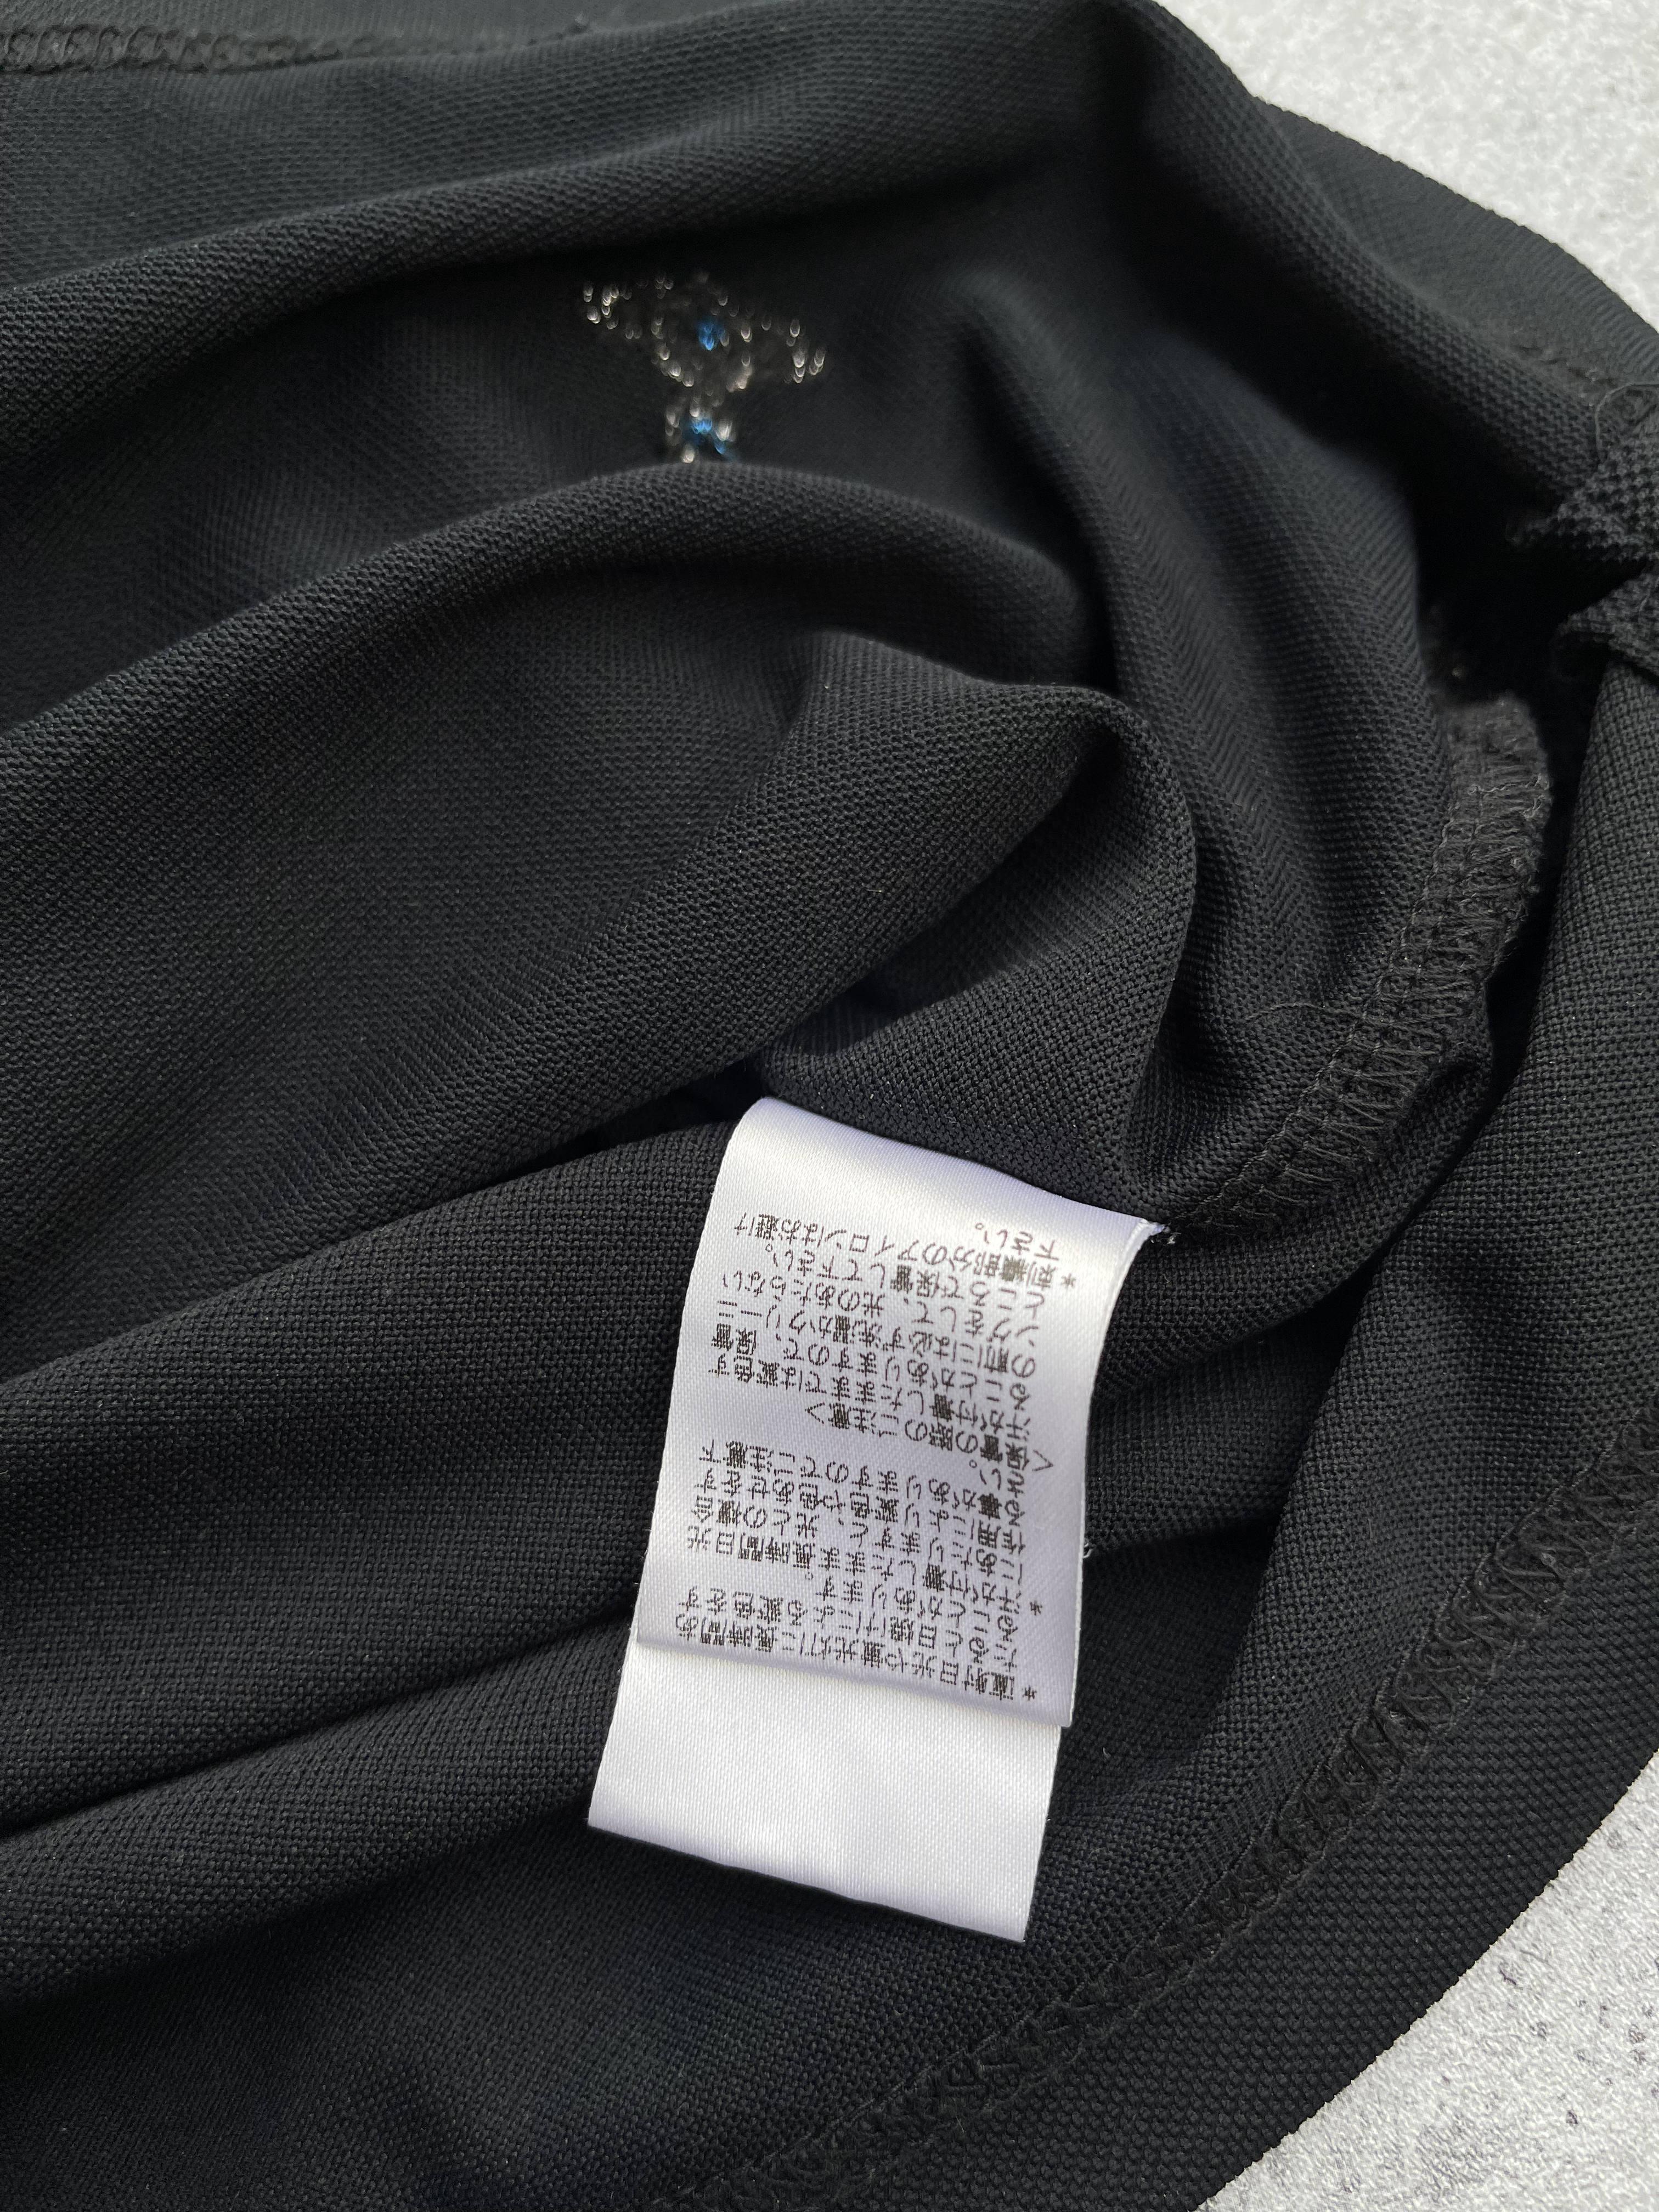 Black Vivienne Westwood “Propaganda” Thermal Polo Shirt For Sale